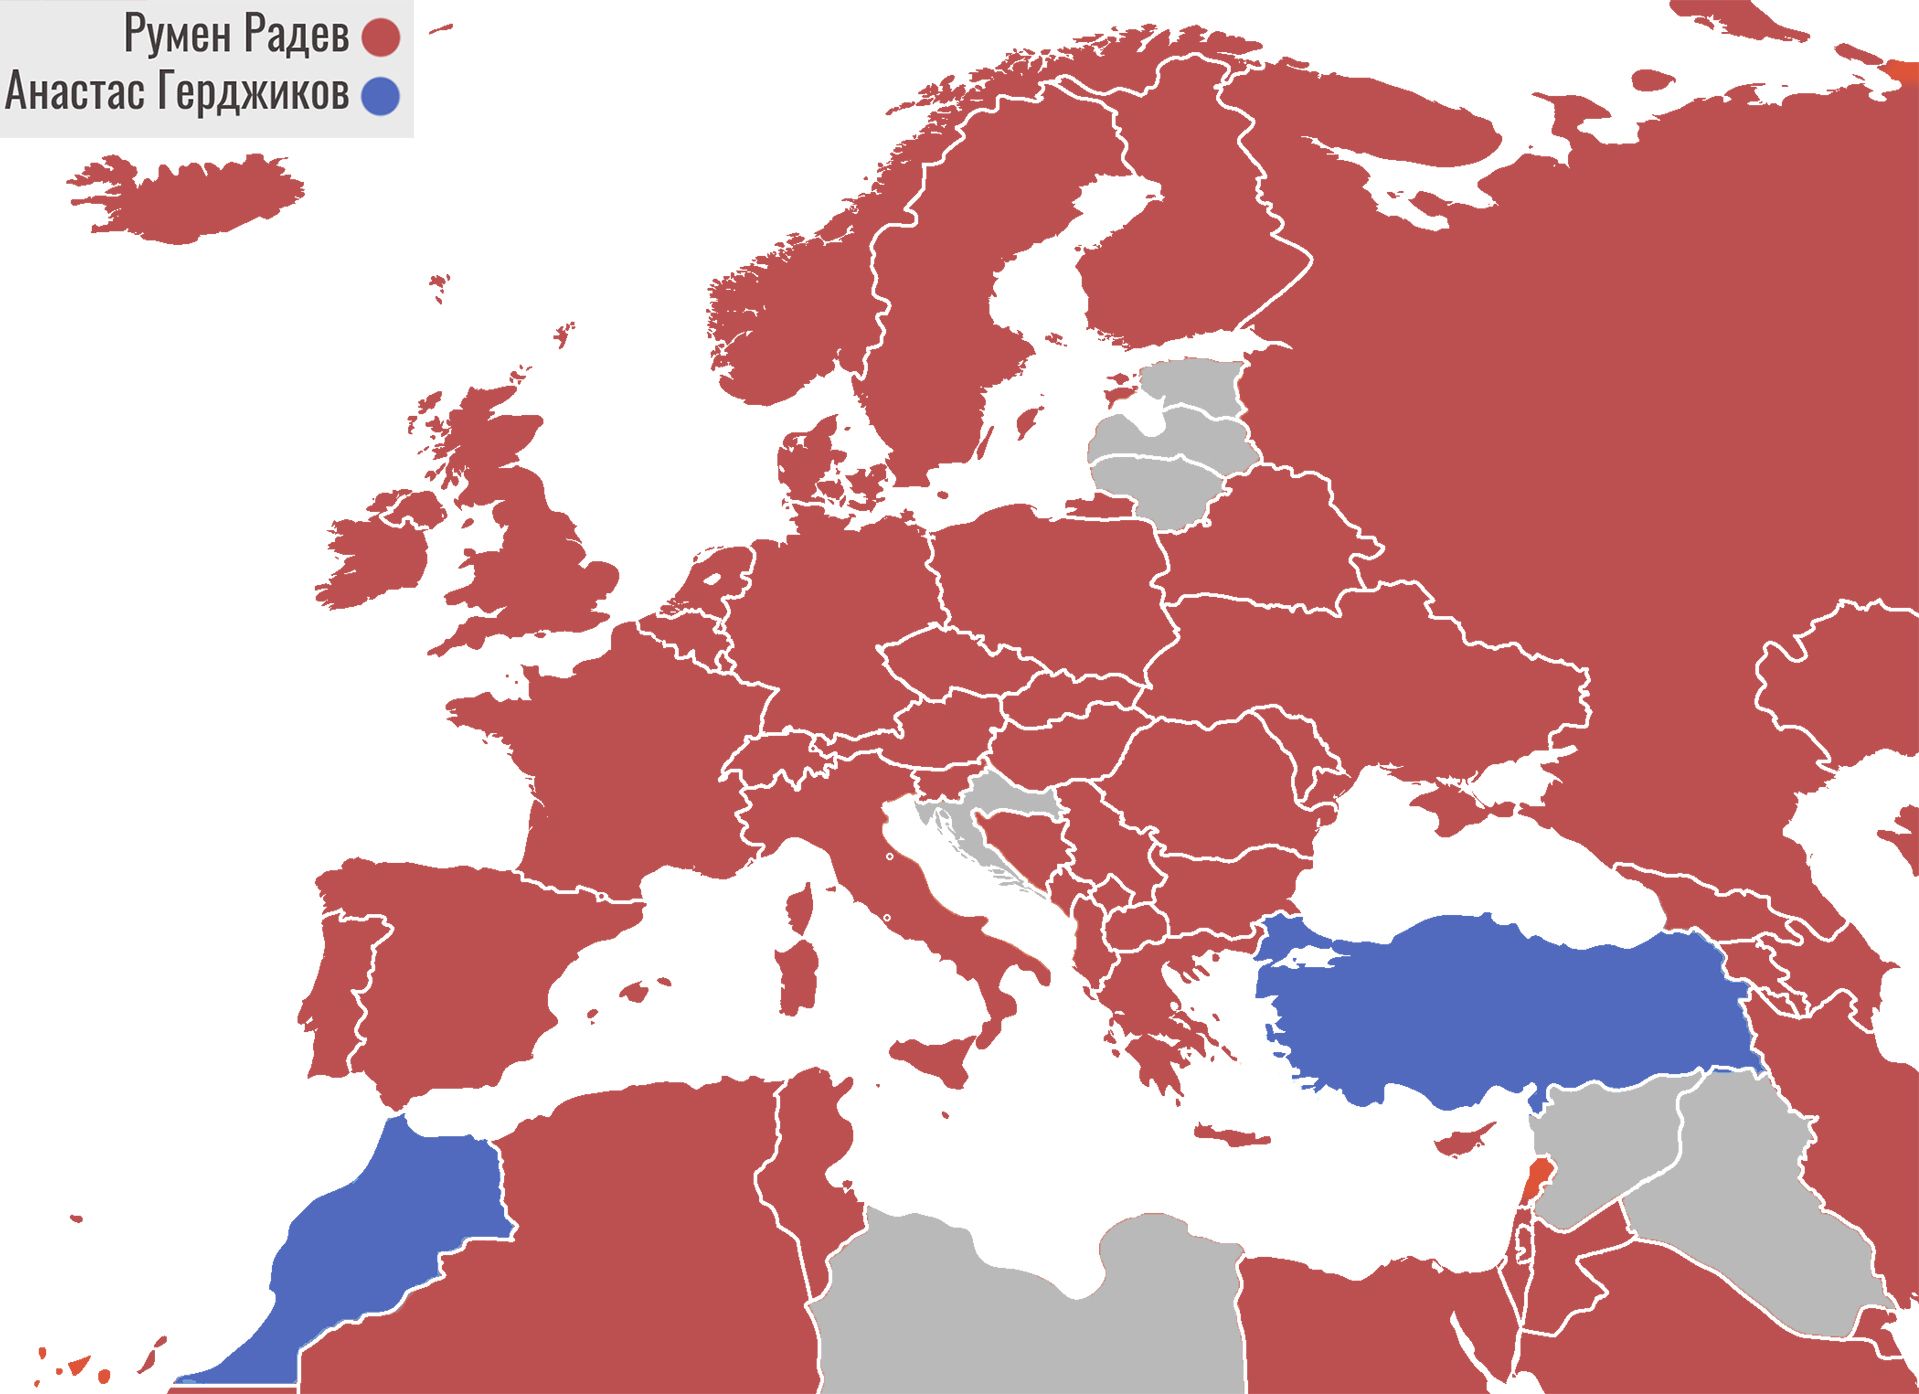  Анастас Герджиков печели само в Турция и Мароко от задграничния избор 